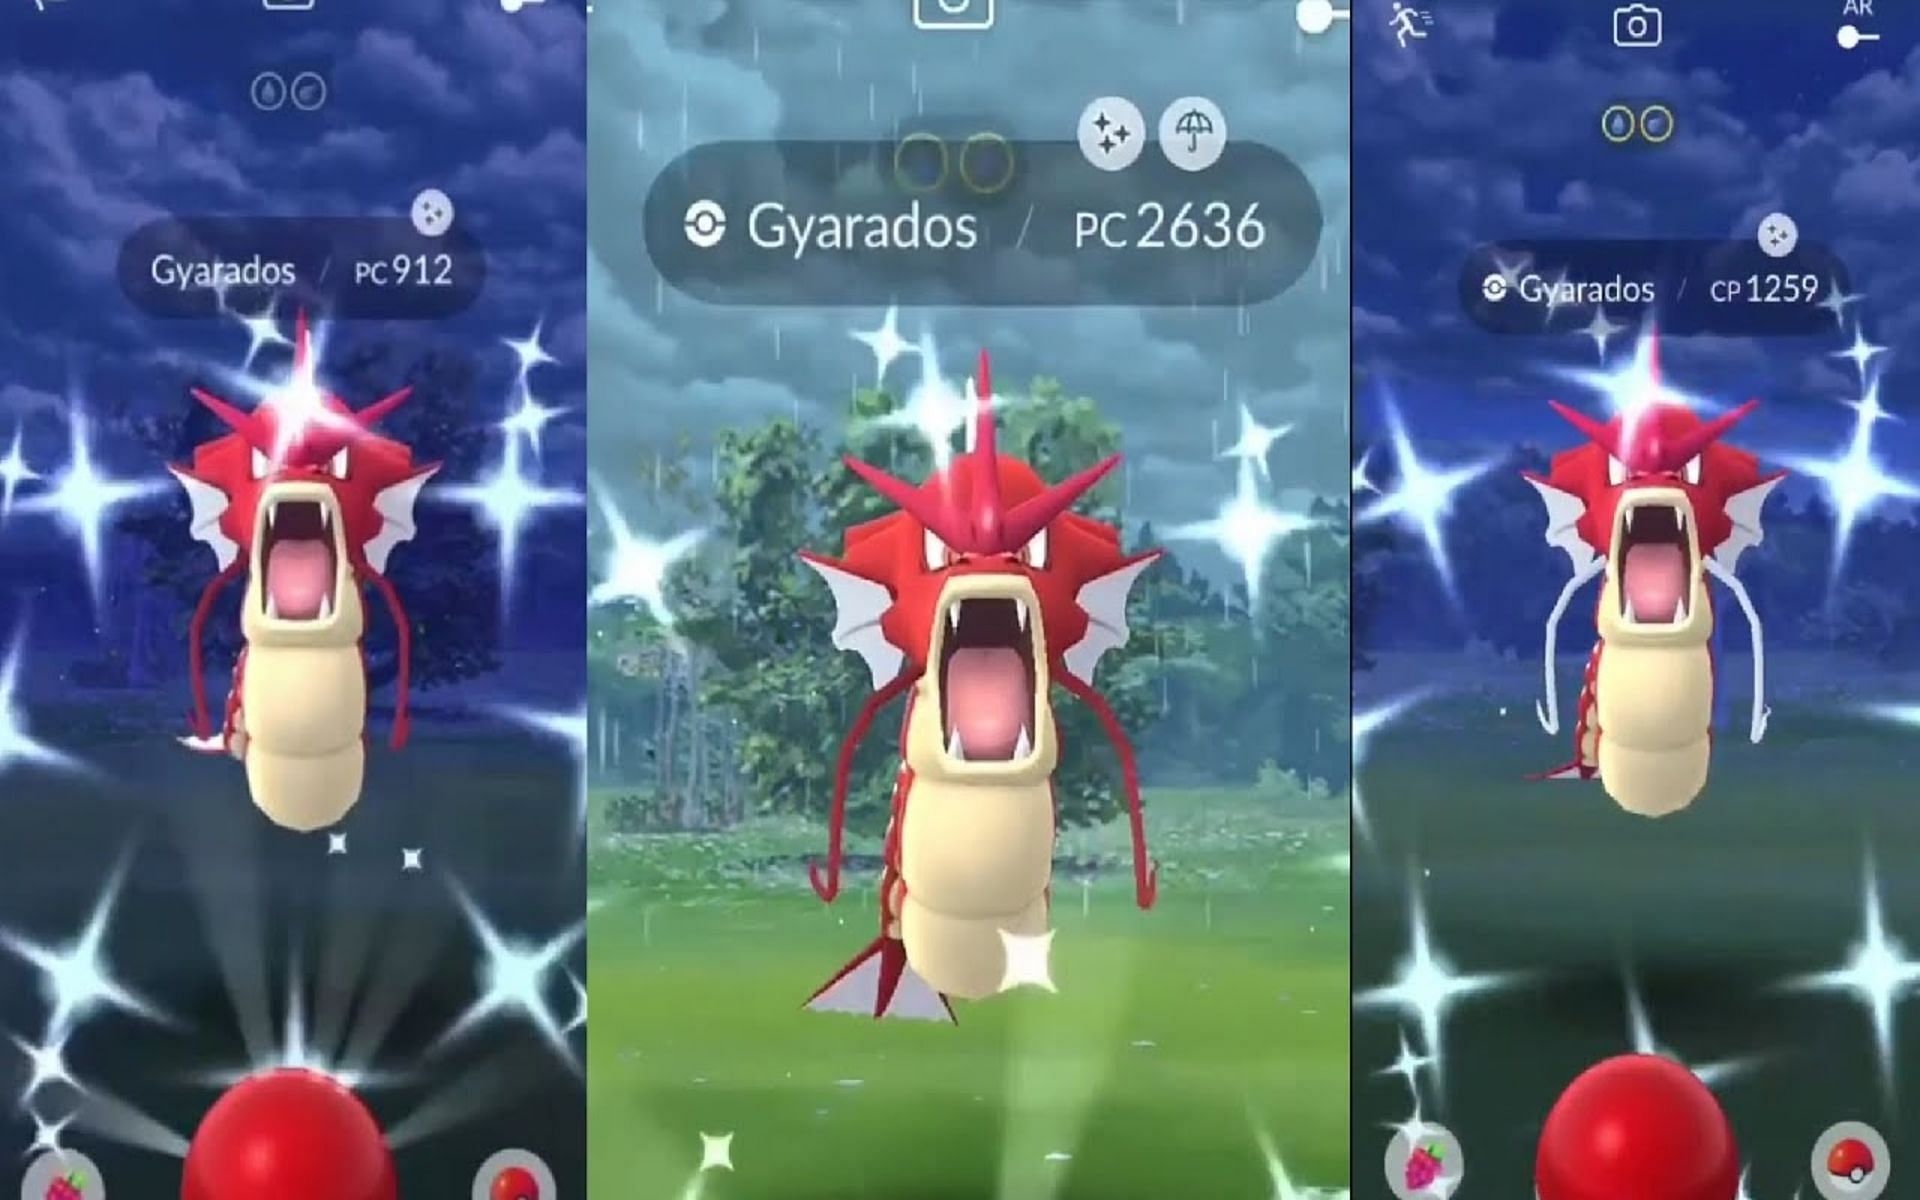 Gyarados has an extremely popular shiny sprite (Image via SJX3gaming YouTube)